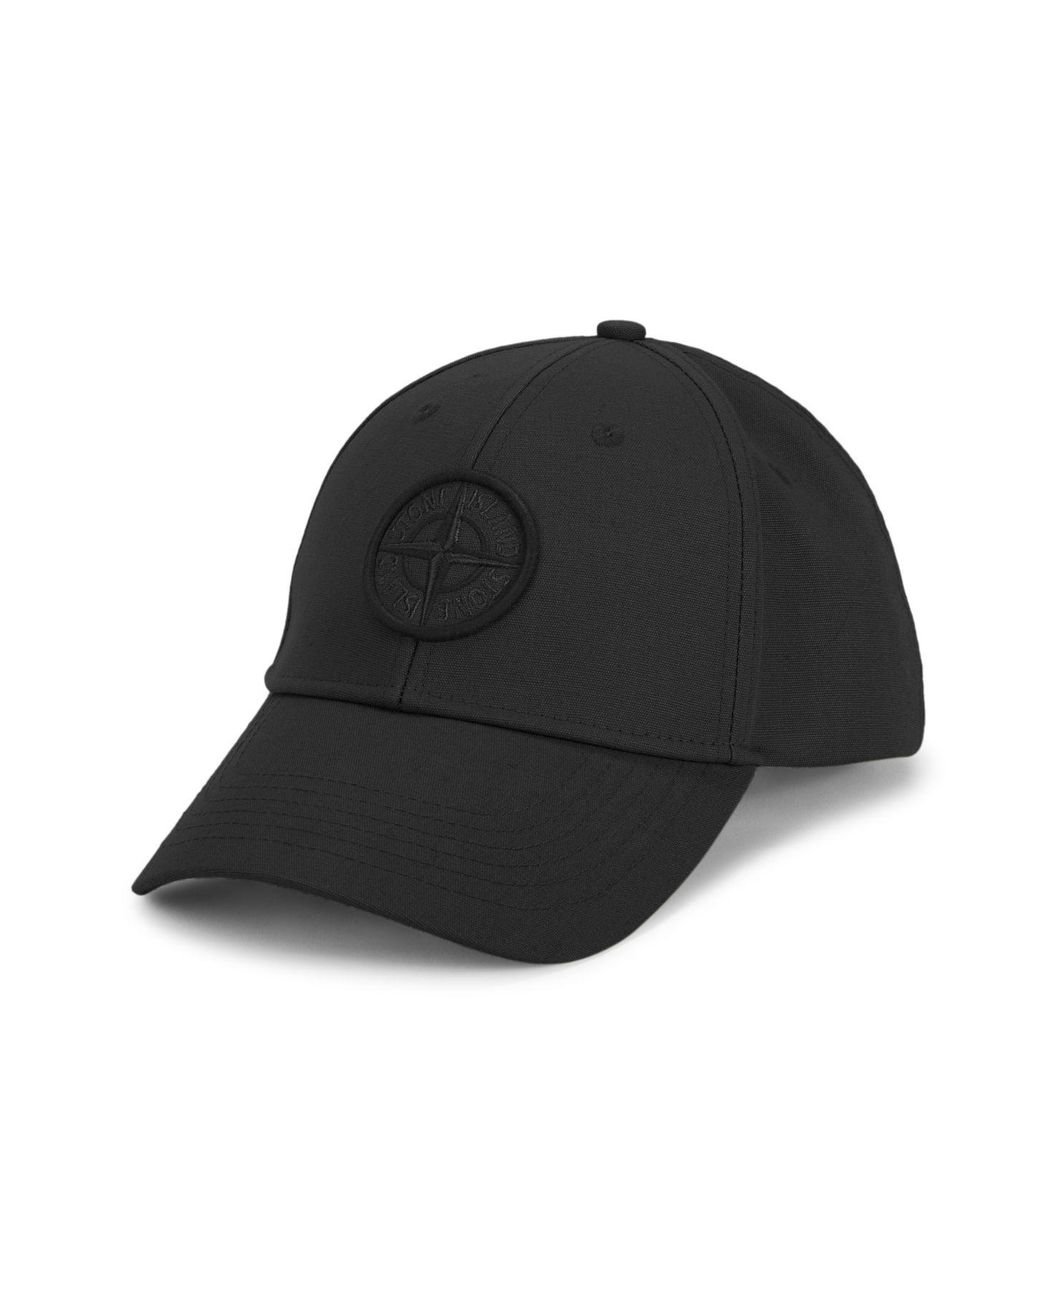 Stone Island Cotton Compass Logo Baseball Cap in Black for Men - Save ...